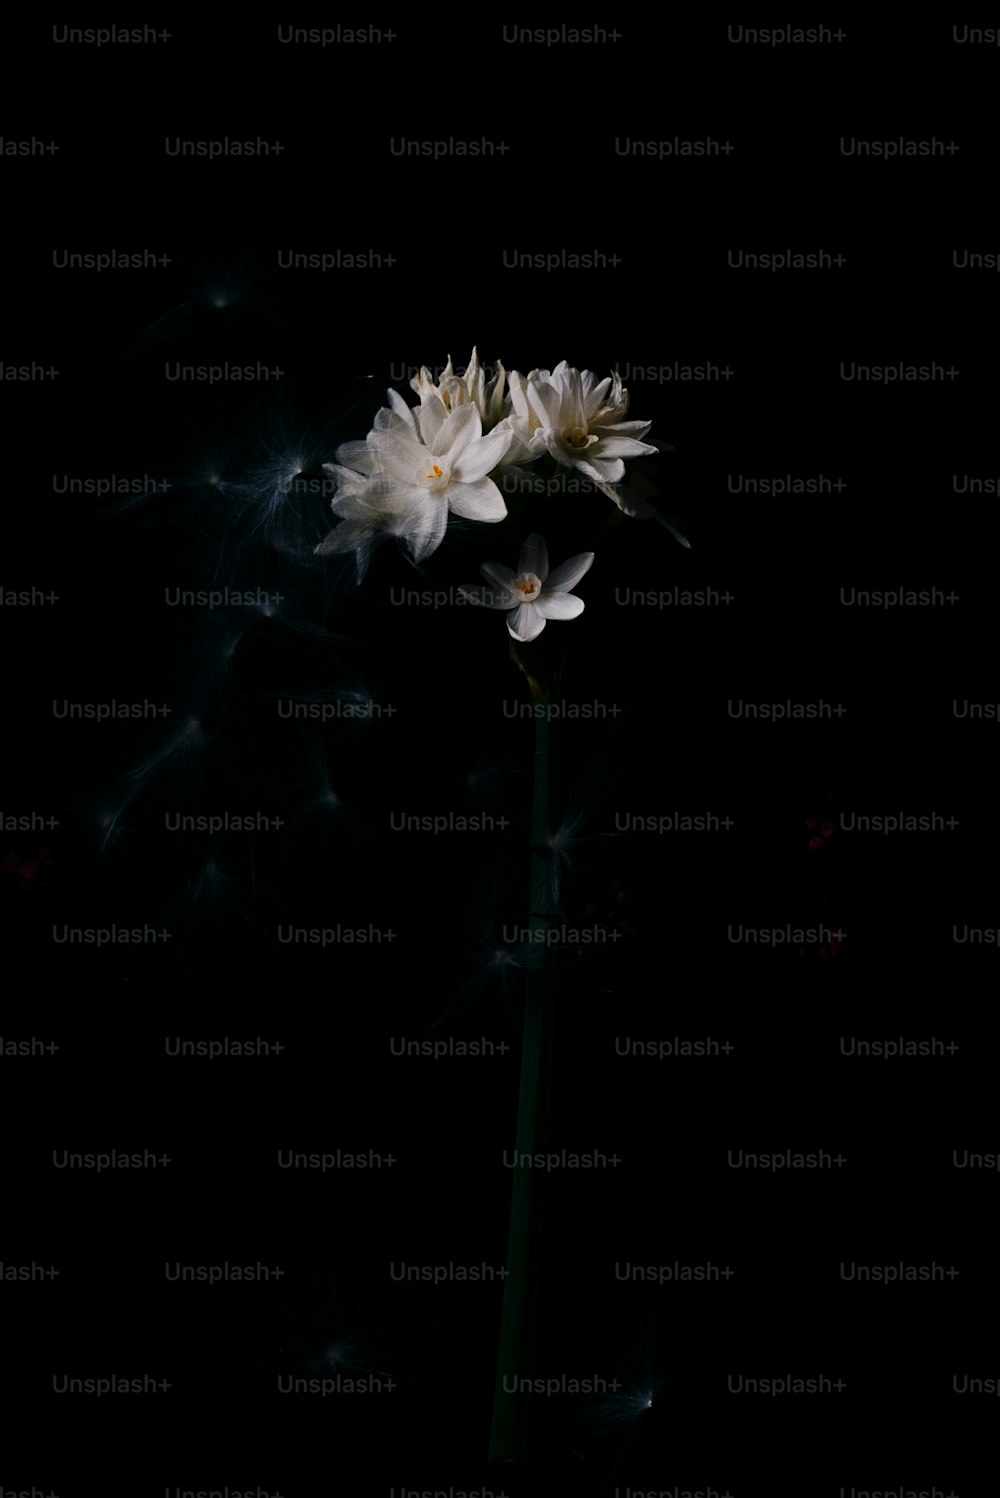 a single white flower in a dark room